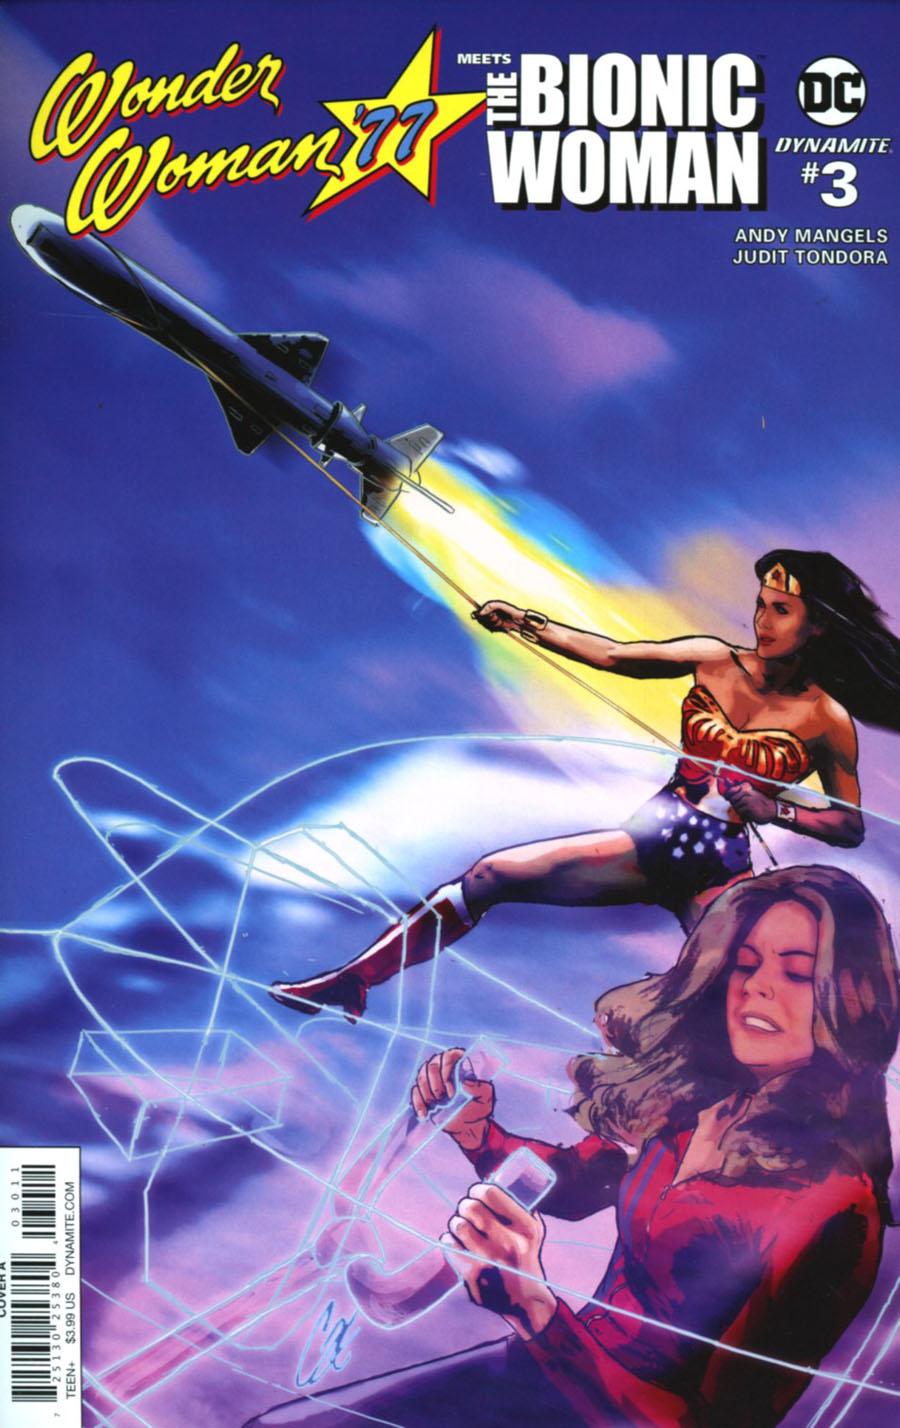 Wonder Woman 77 Meets The Bionic Woman Vol. 1 #3